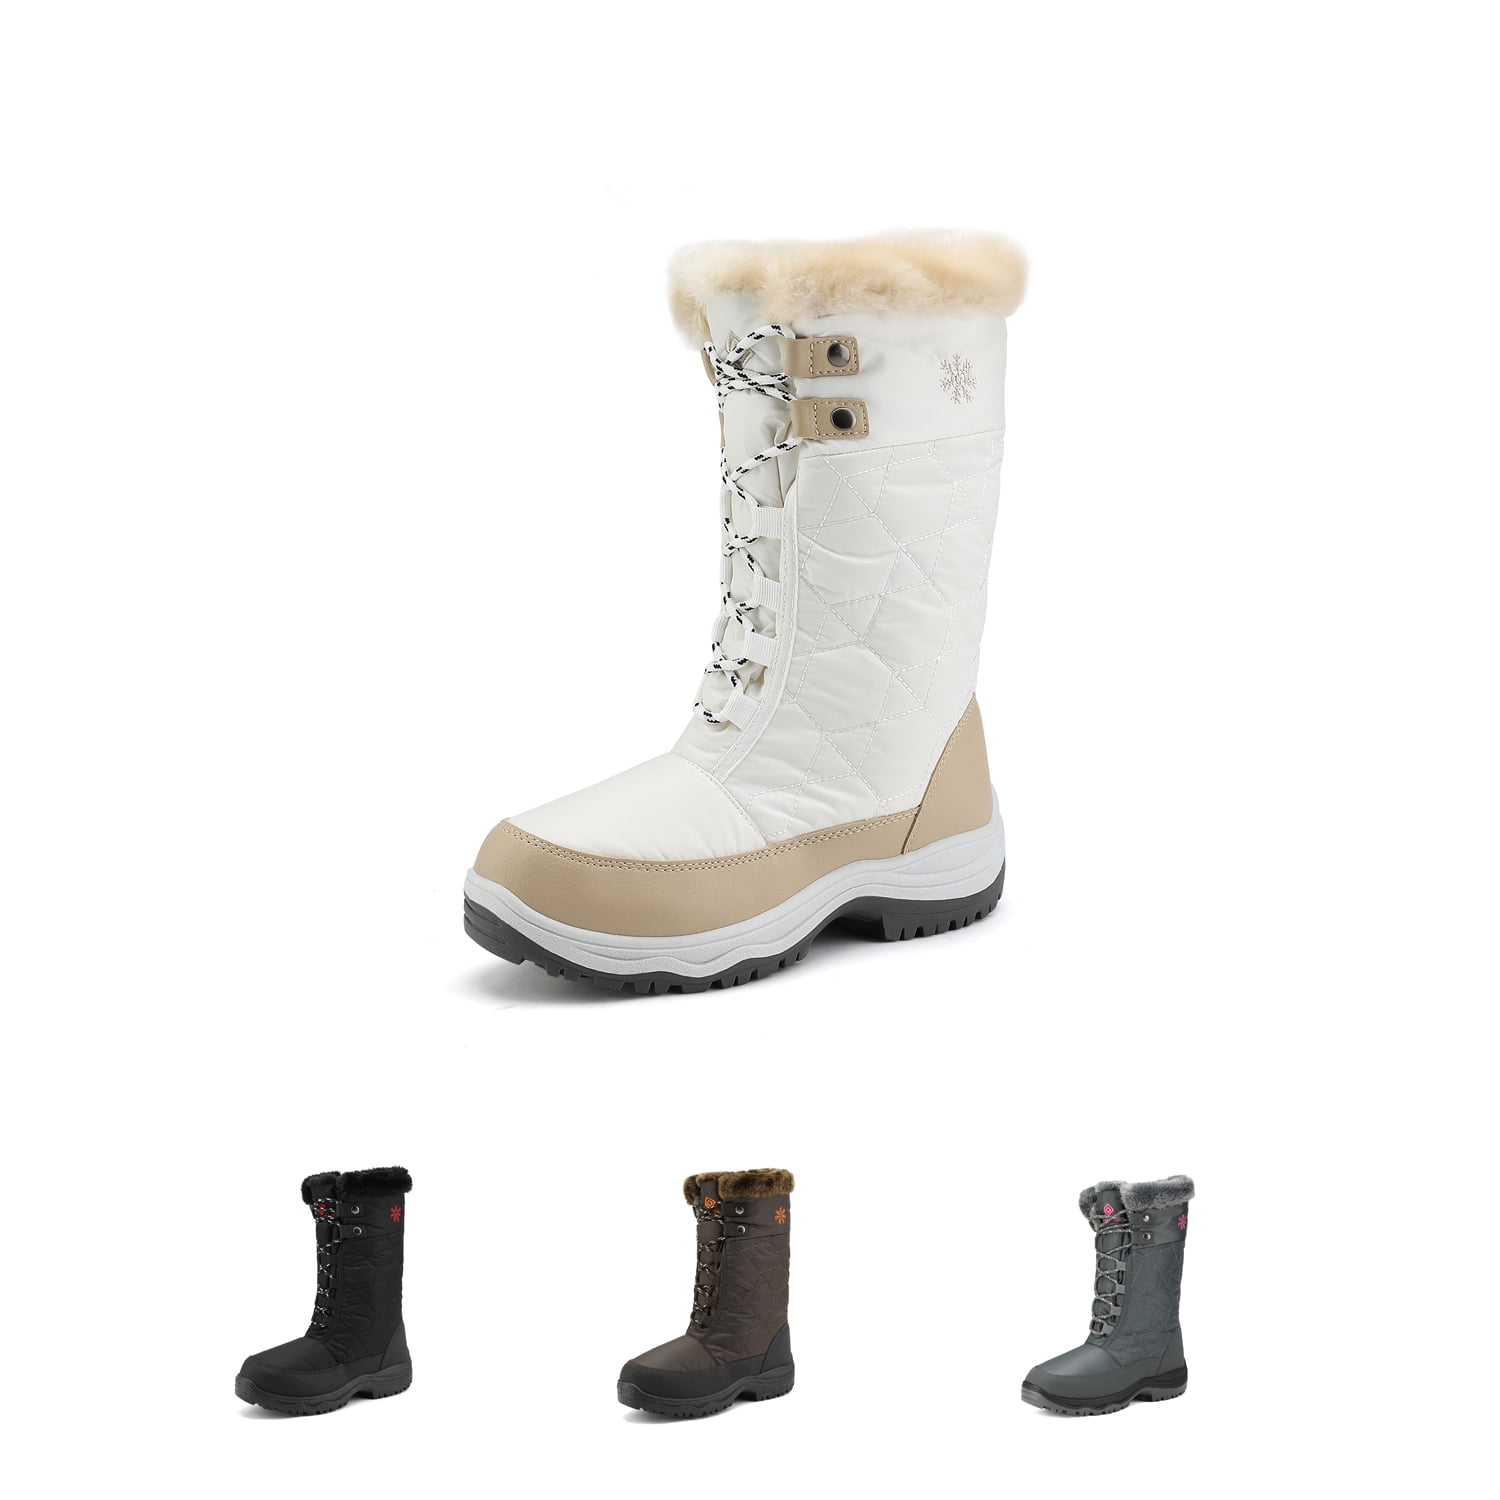 Women's Winter Furry Platform Mid-Calf Boots Wedges High Heel Warm Shoes Chic